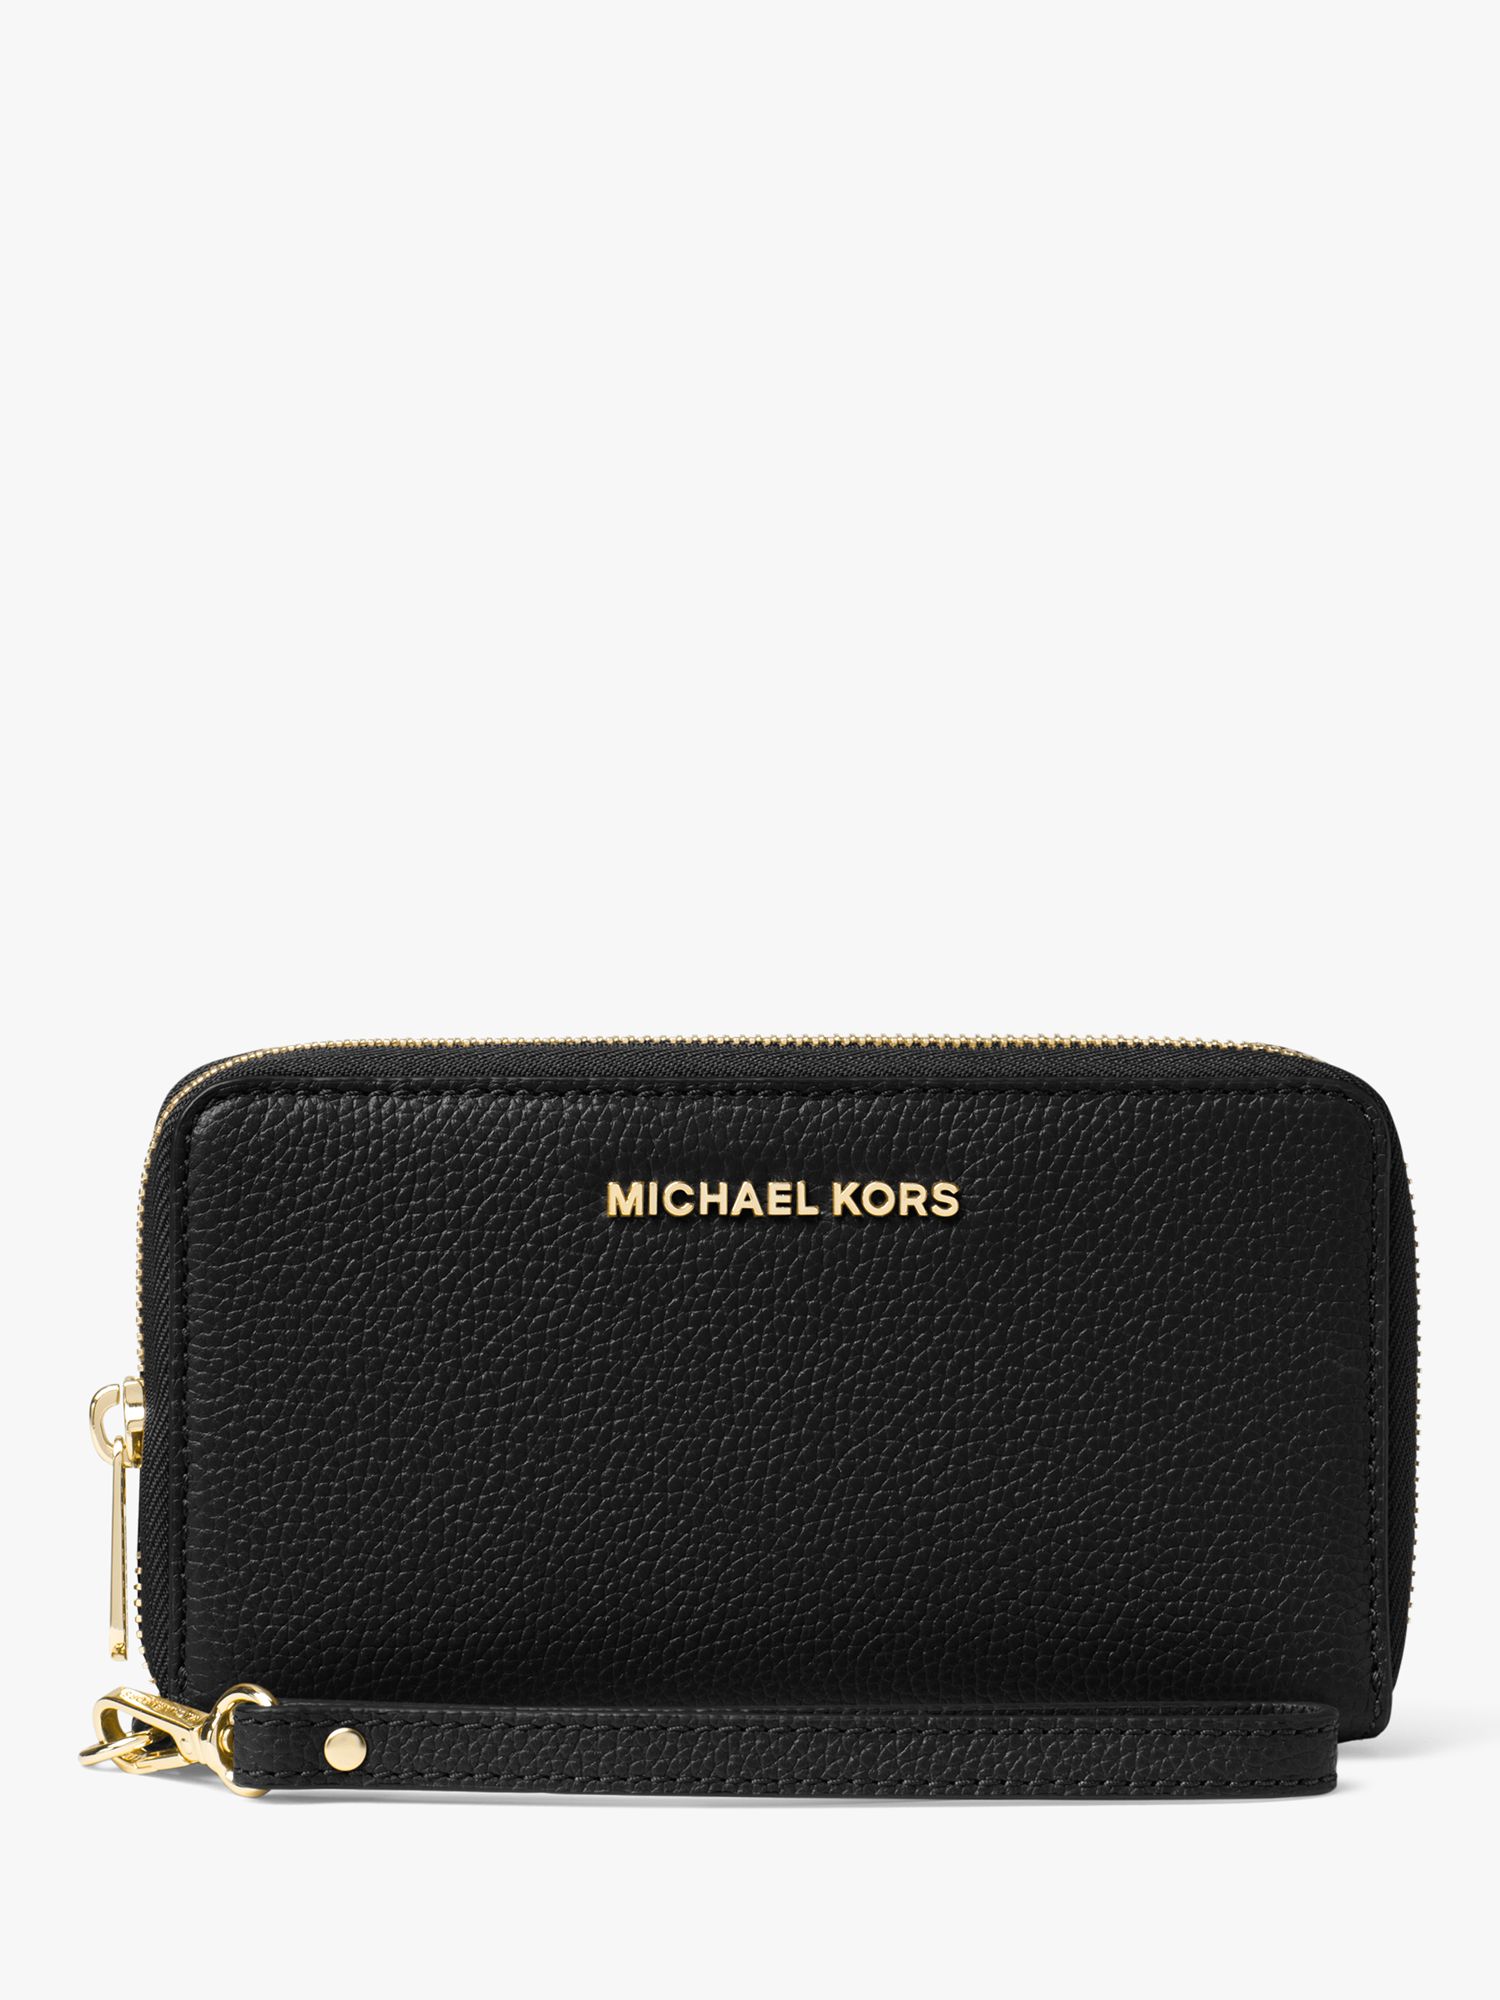 michael kors black large purse